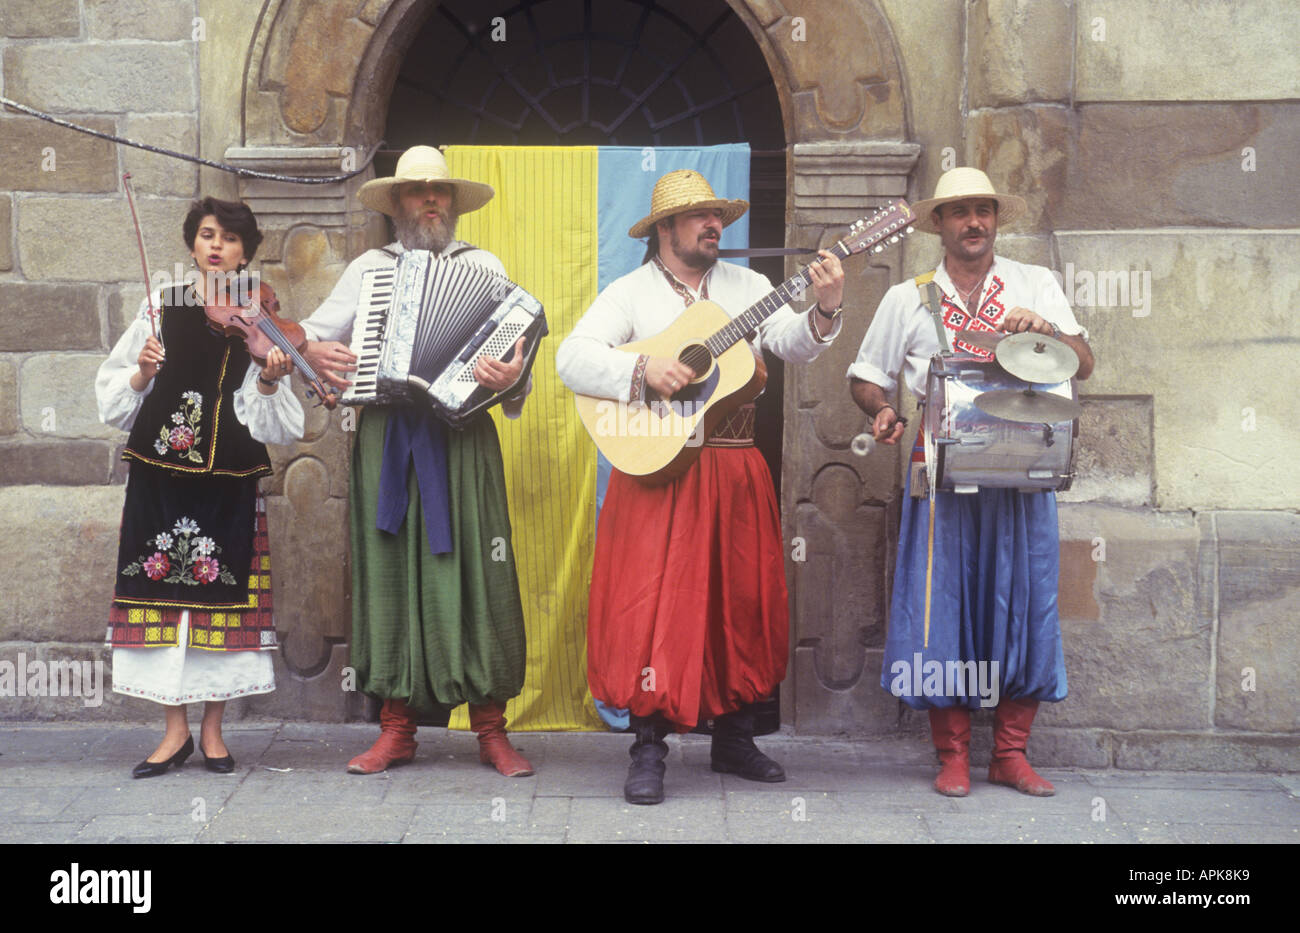 Folk musicians, Krakow, Poland Stock Photo